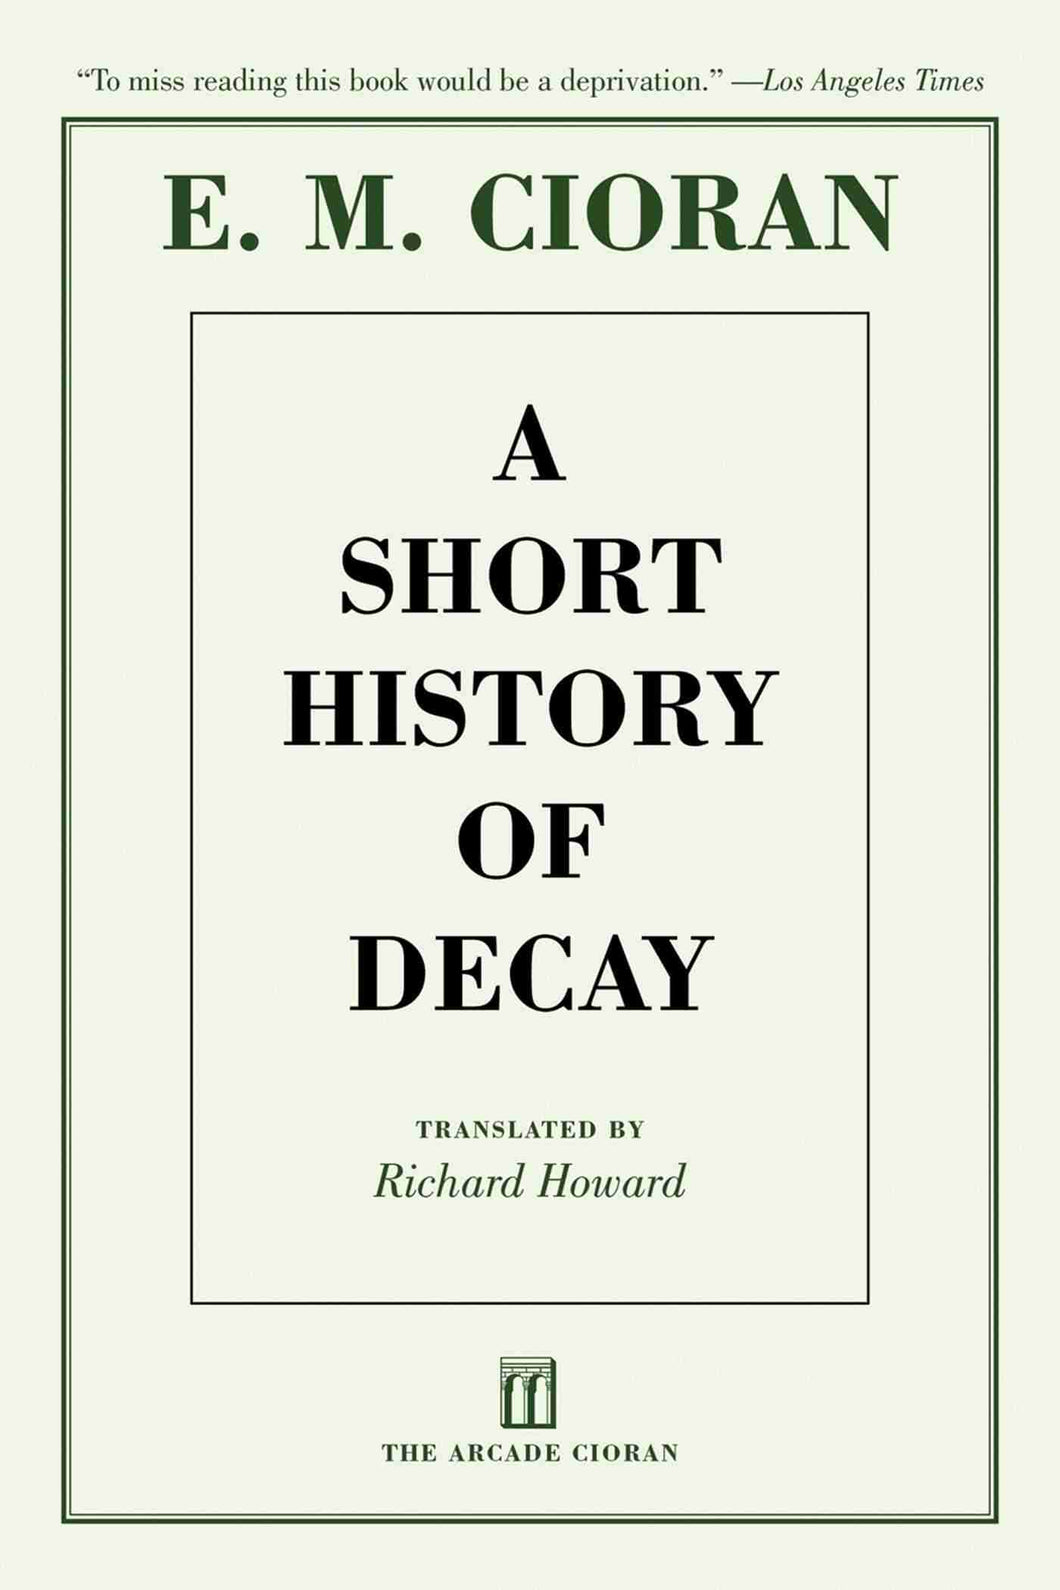 Short History of Decay ร้านหนังสือและสิ่งของ เป็นร้านหนังสือภาษาอังกฤษหายาก และร้านกาแฟ หรือ บุ๊คคาเฟ่ ตั้งอยู่สุขุมวิท กรุงเทพ